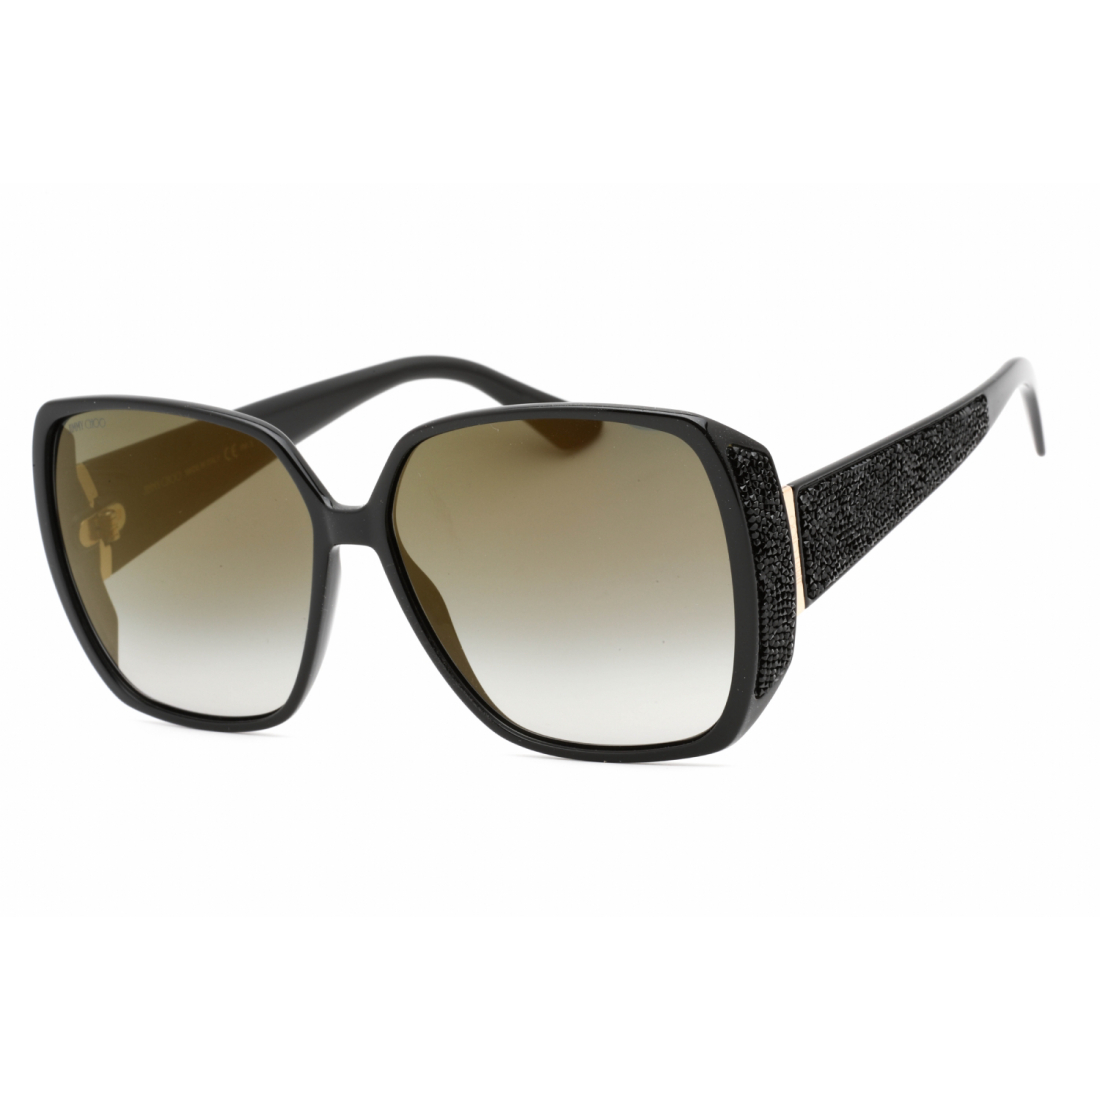 Women's 'CLOE/S 807 BLACK' Sunglasses